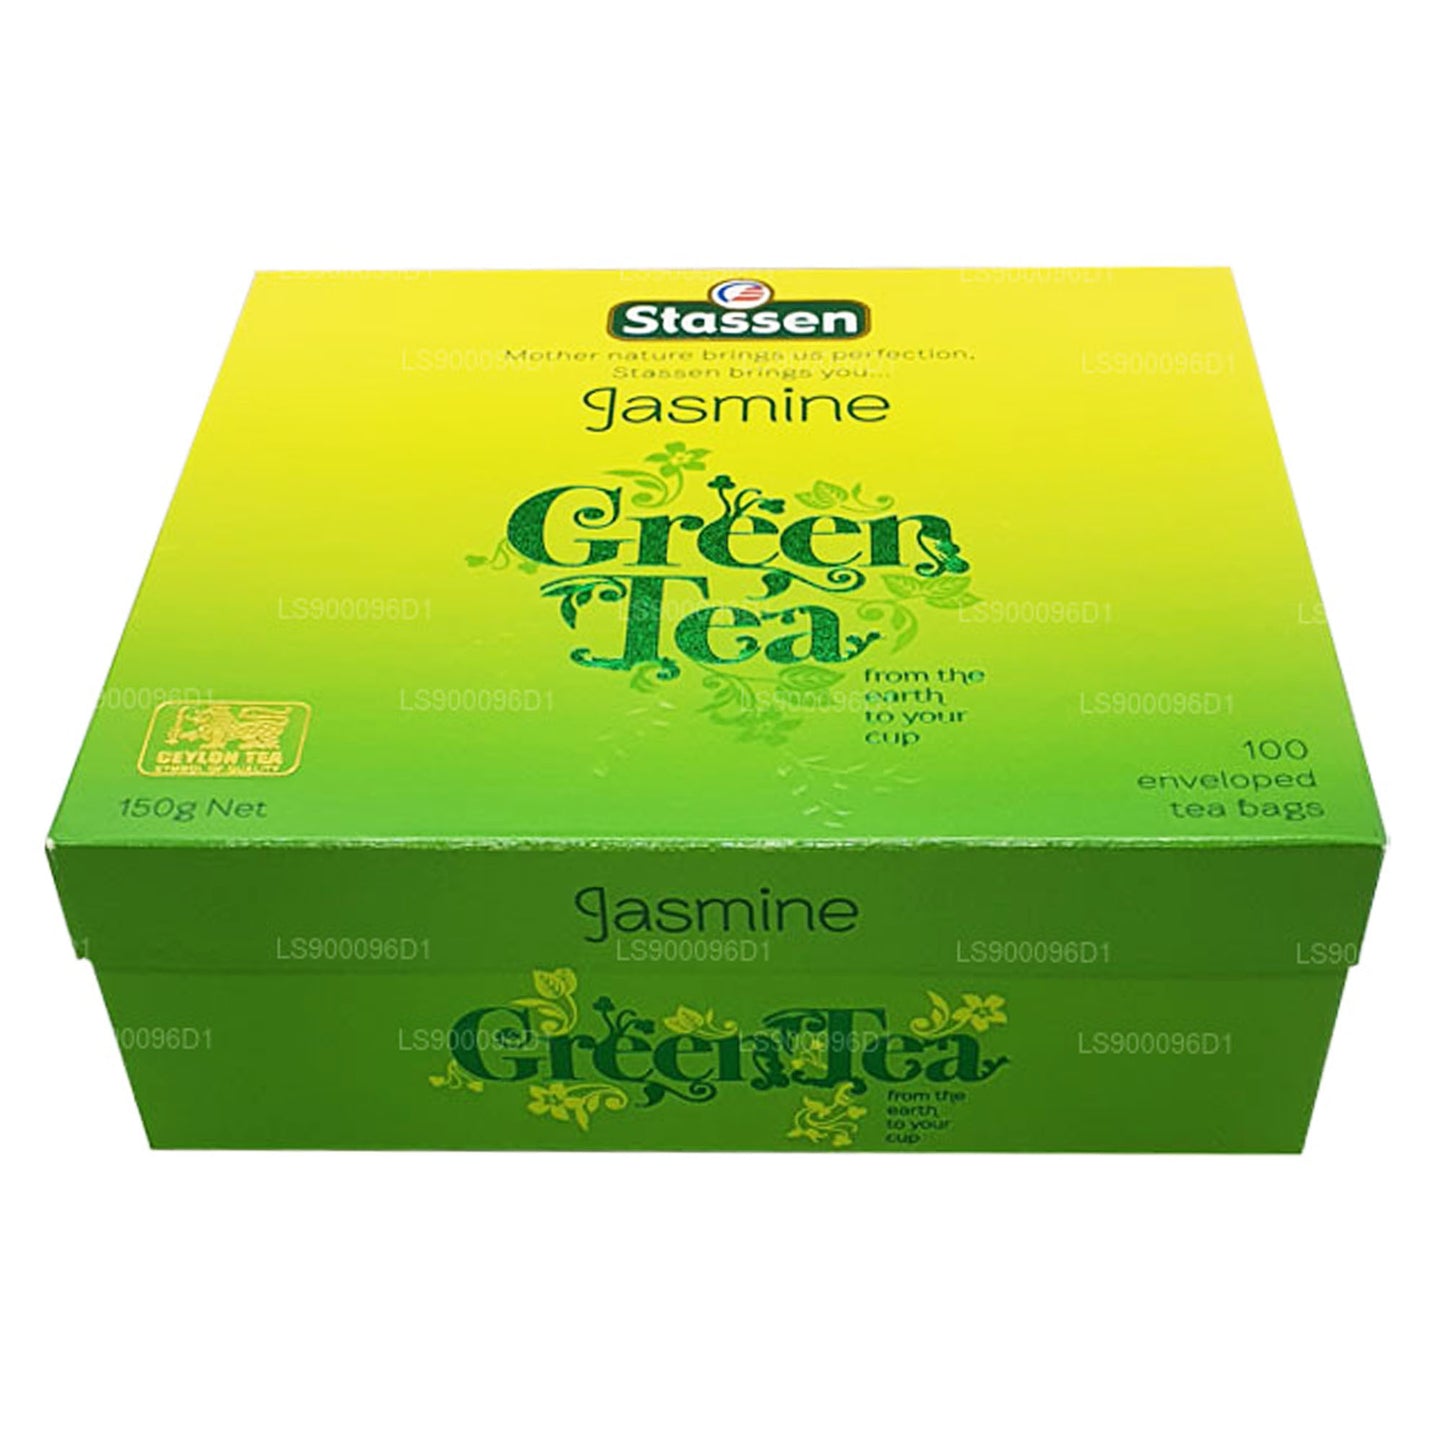 Tè verde al gelsomino Stassen (150 g) 100 bustine di tè